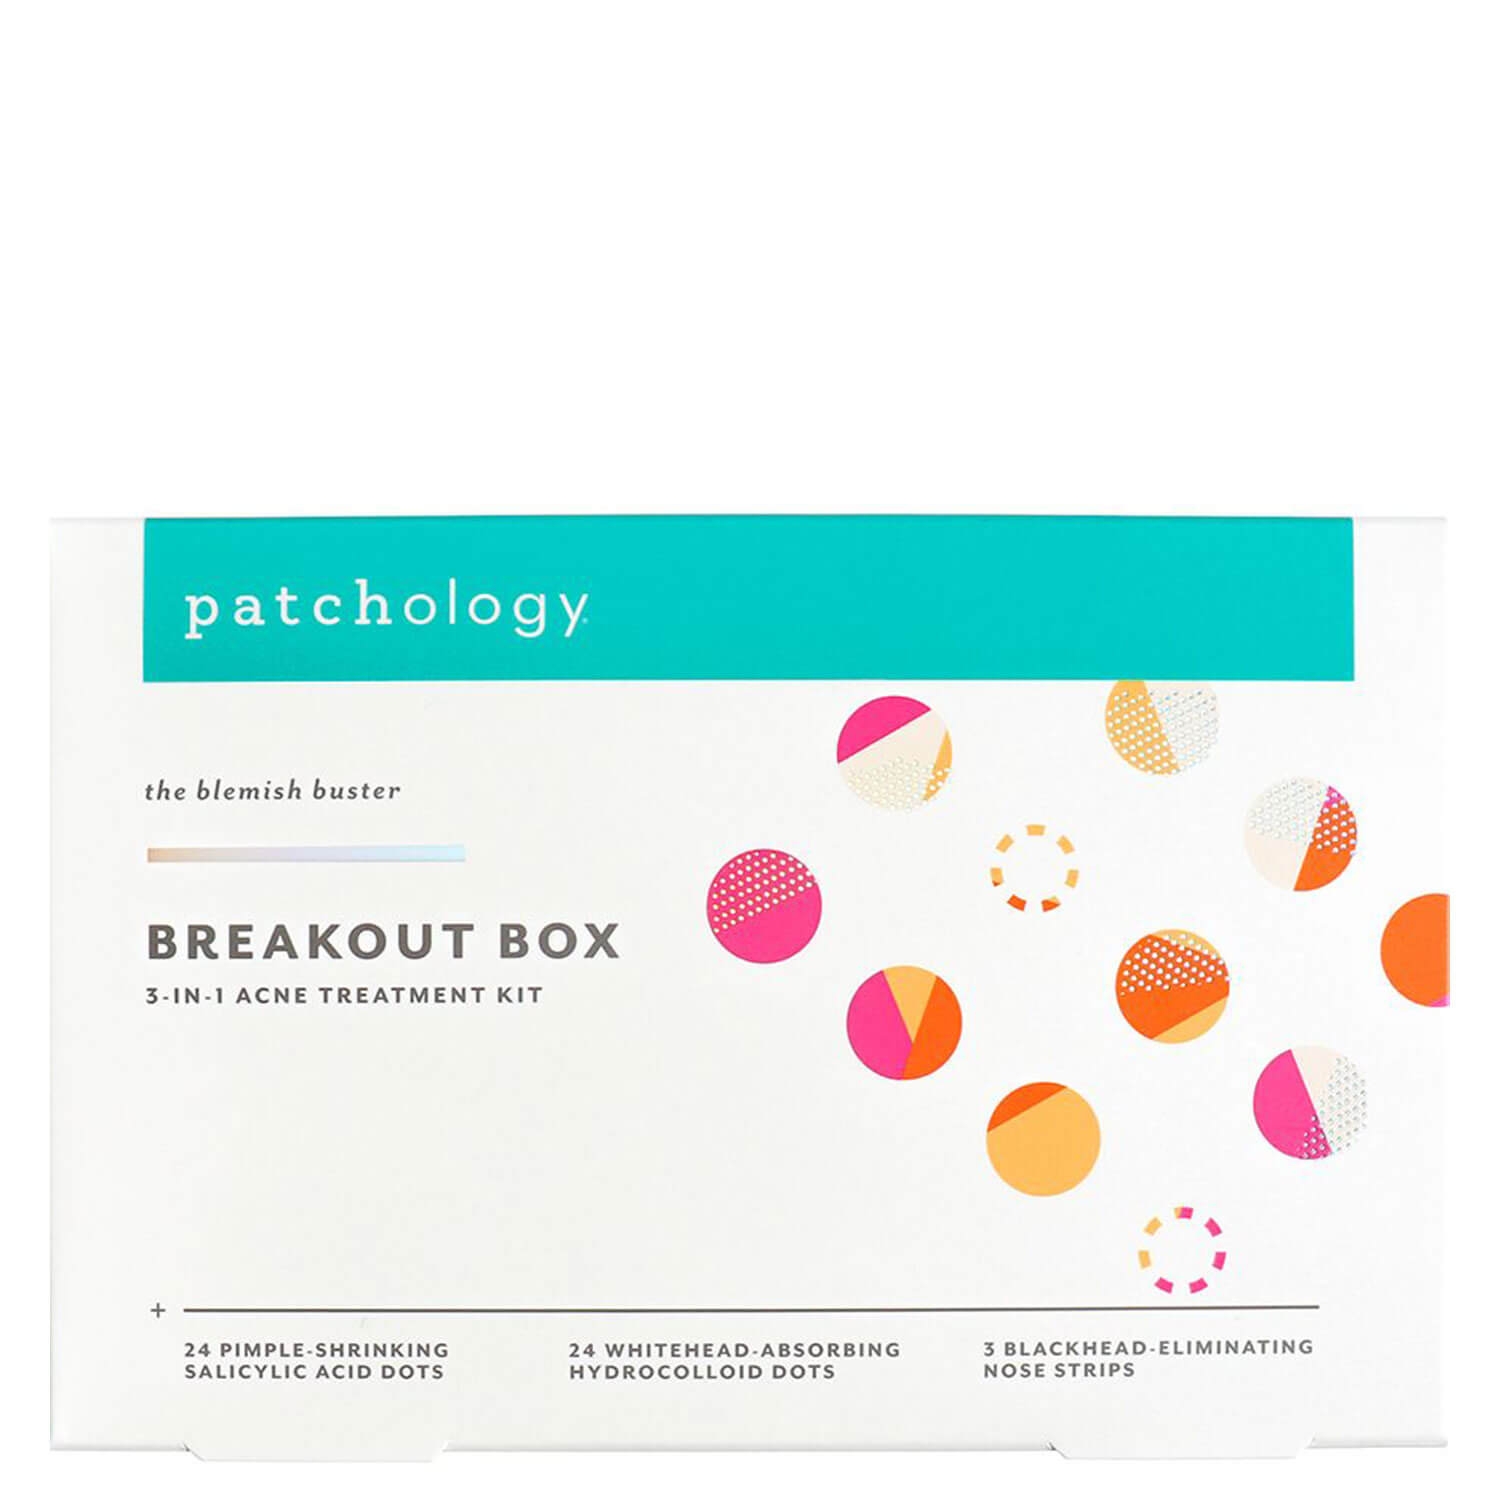 Produktbild von patchology Kits - Breakout Box 3-In-1 Acne Treatment Kit